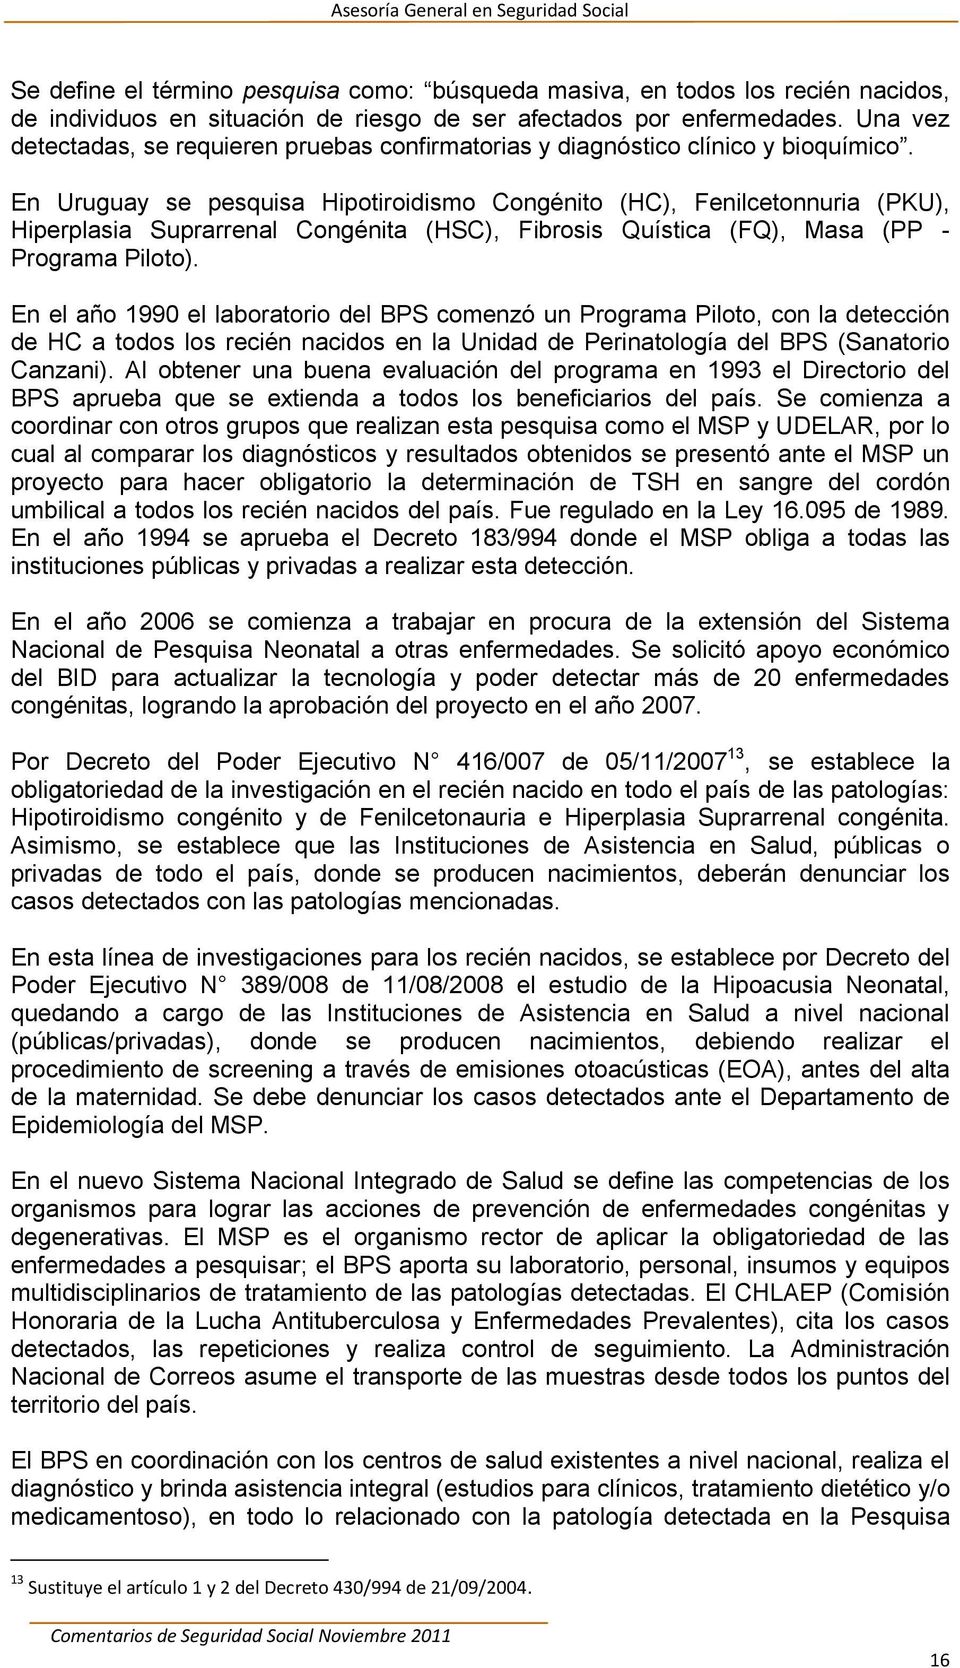 En Uruguay se pesquisa Hipotiroidismo Congénito (HC), Fenilcetonnuria (PKU), Hiperplasia Suprarrenal Congénita (HSC), Fibrosis Quística (FQ), Masa (PP - Programa Piloto).